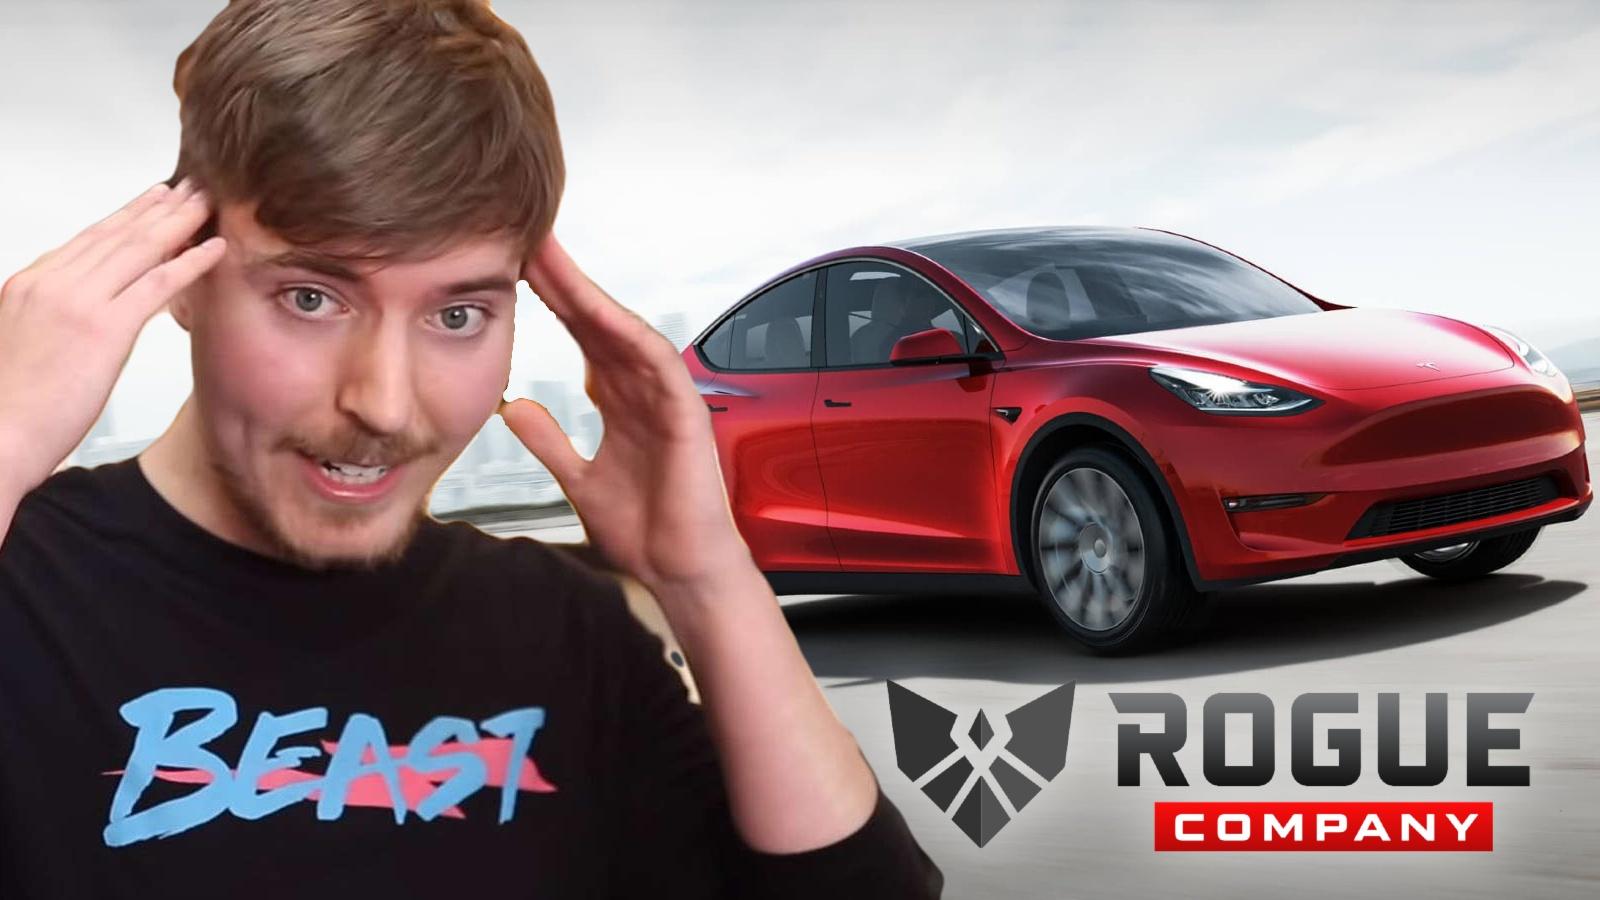 Mr Beast gives away free Tesla for Rogue Company wins